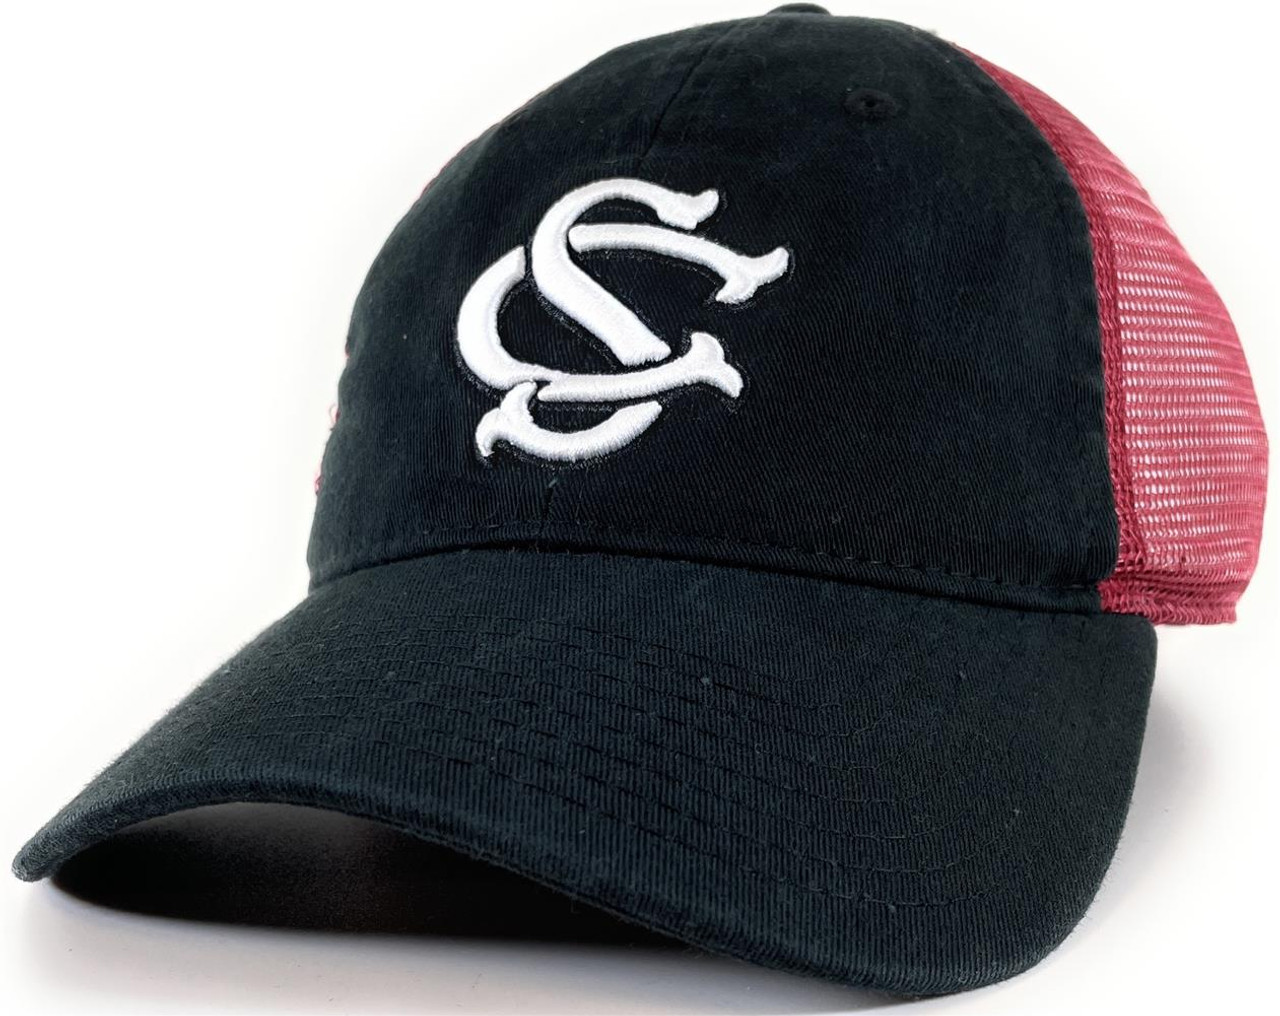 Vintage Louisville Cardinals Mesh Trucker Snapback Cap Hat Made in